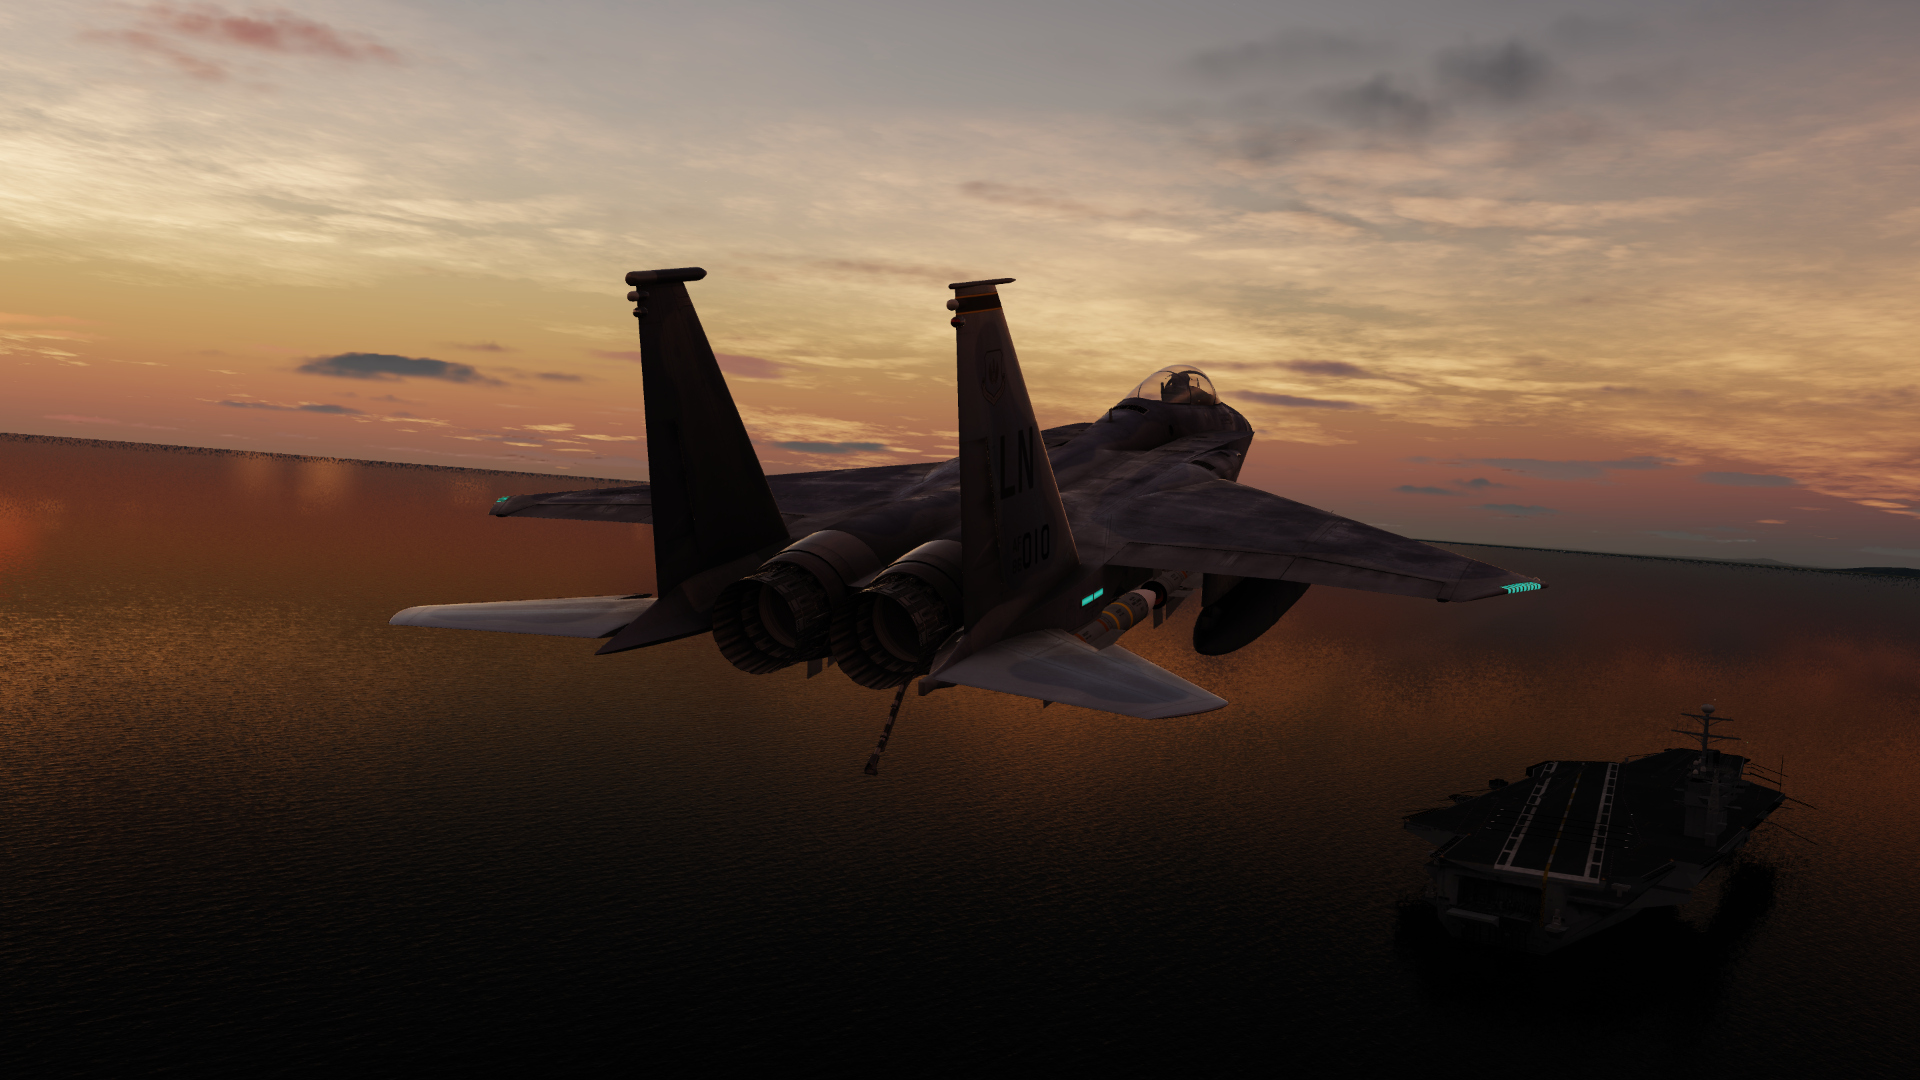 FC3 Naval Mod | Tailhook & HMD sight for F-15C, MiG-29, Su-27, J-11A